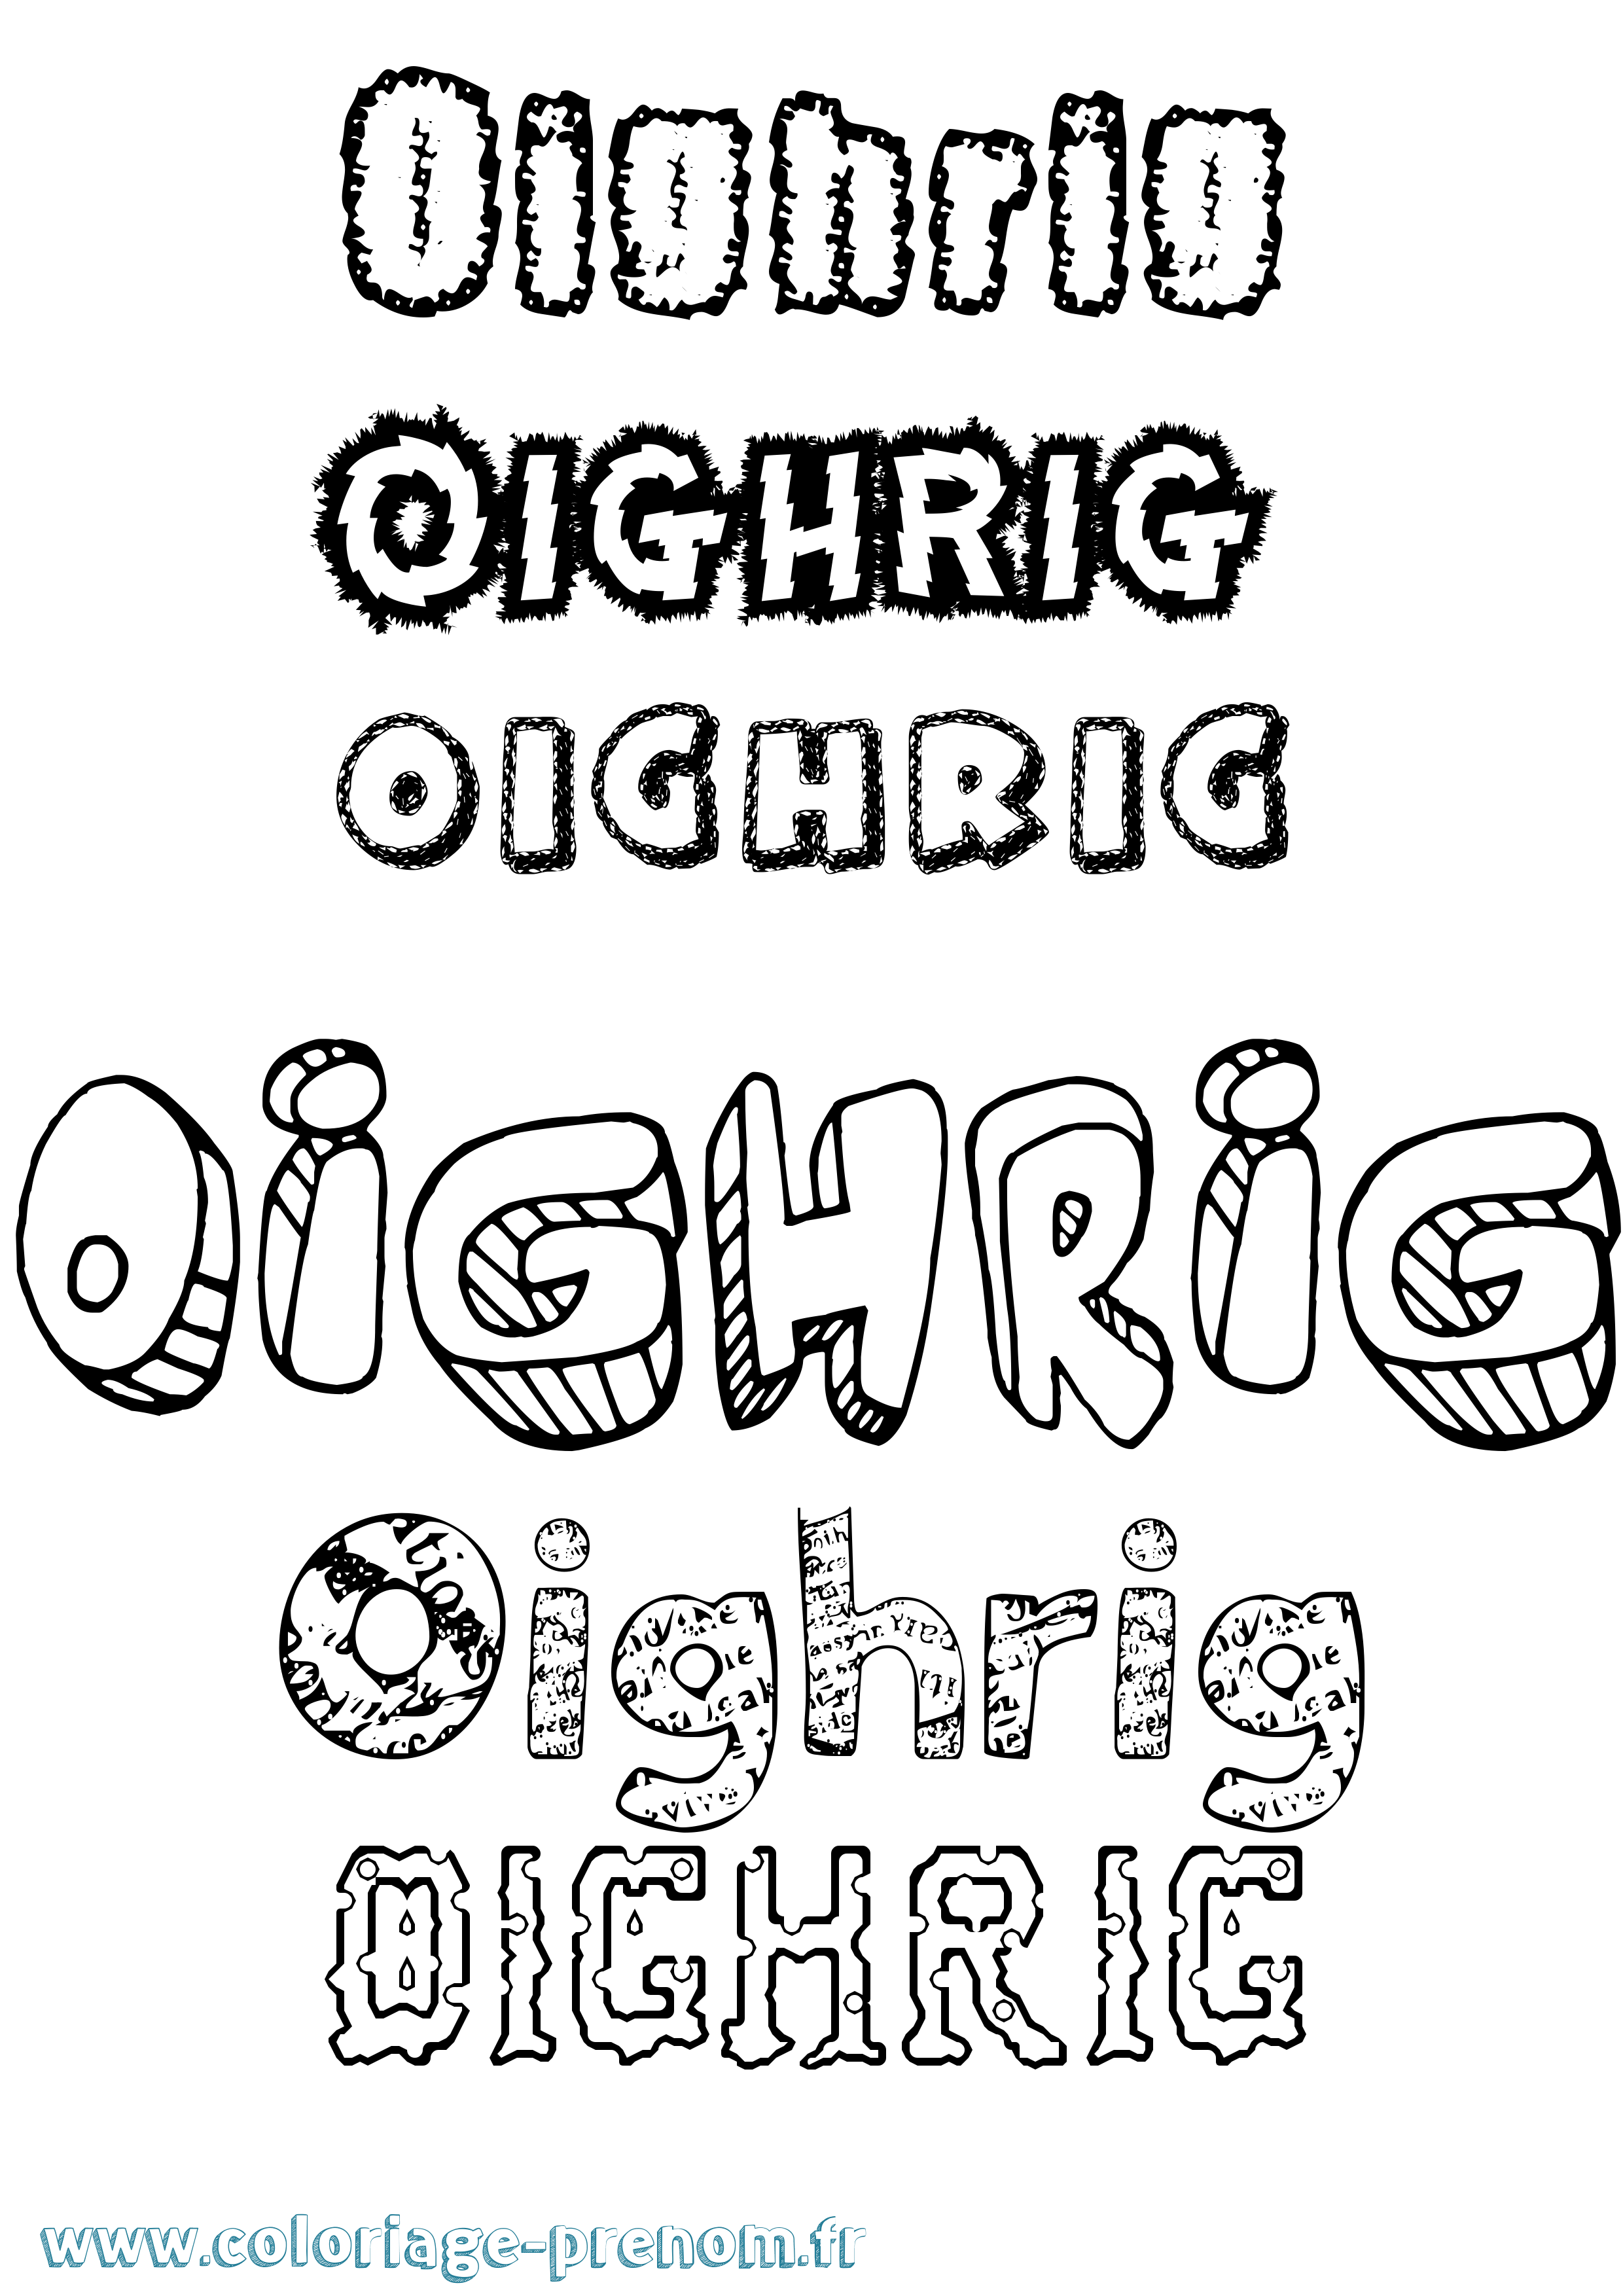 Coloriage prénom Oighrig Destructuré